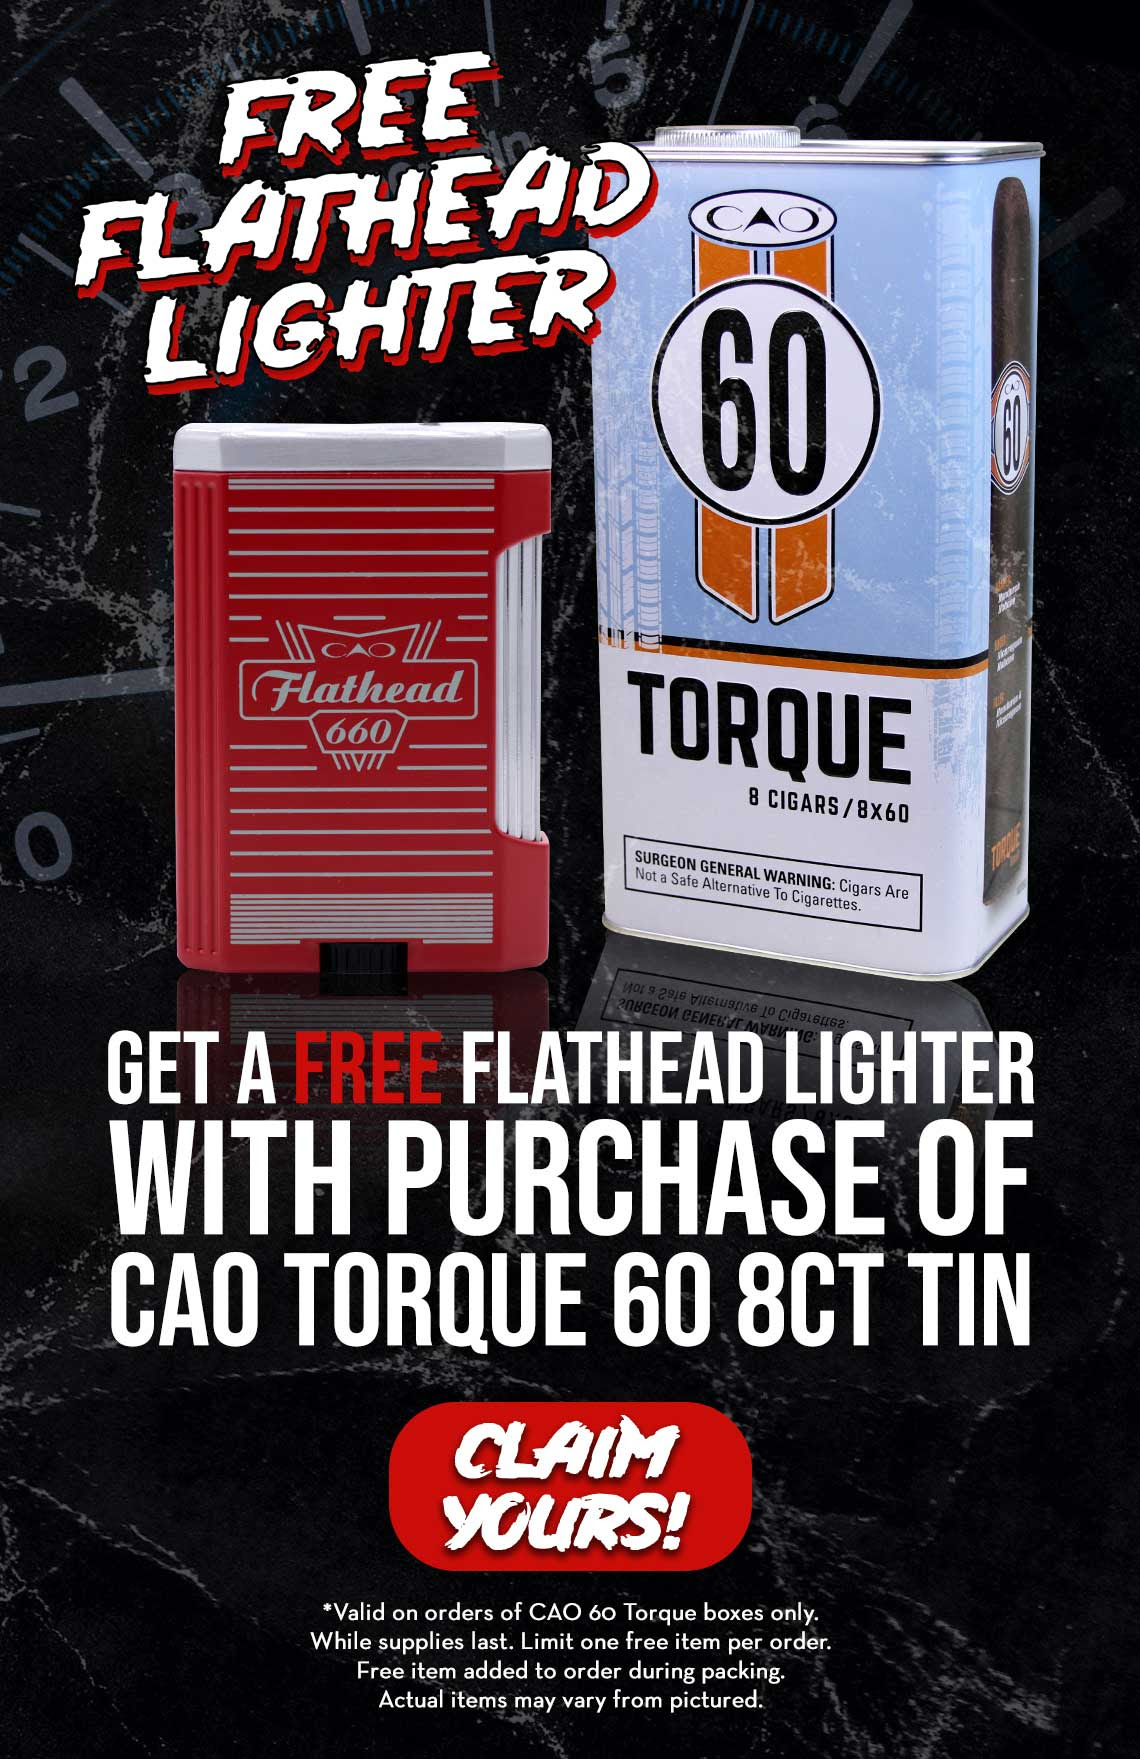 Free CAO Flathead Lighter